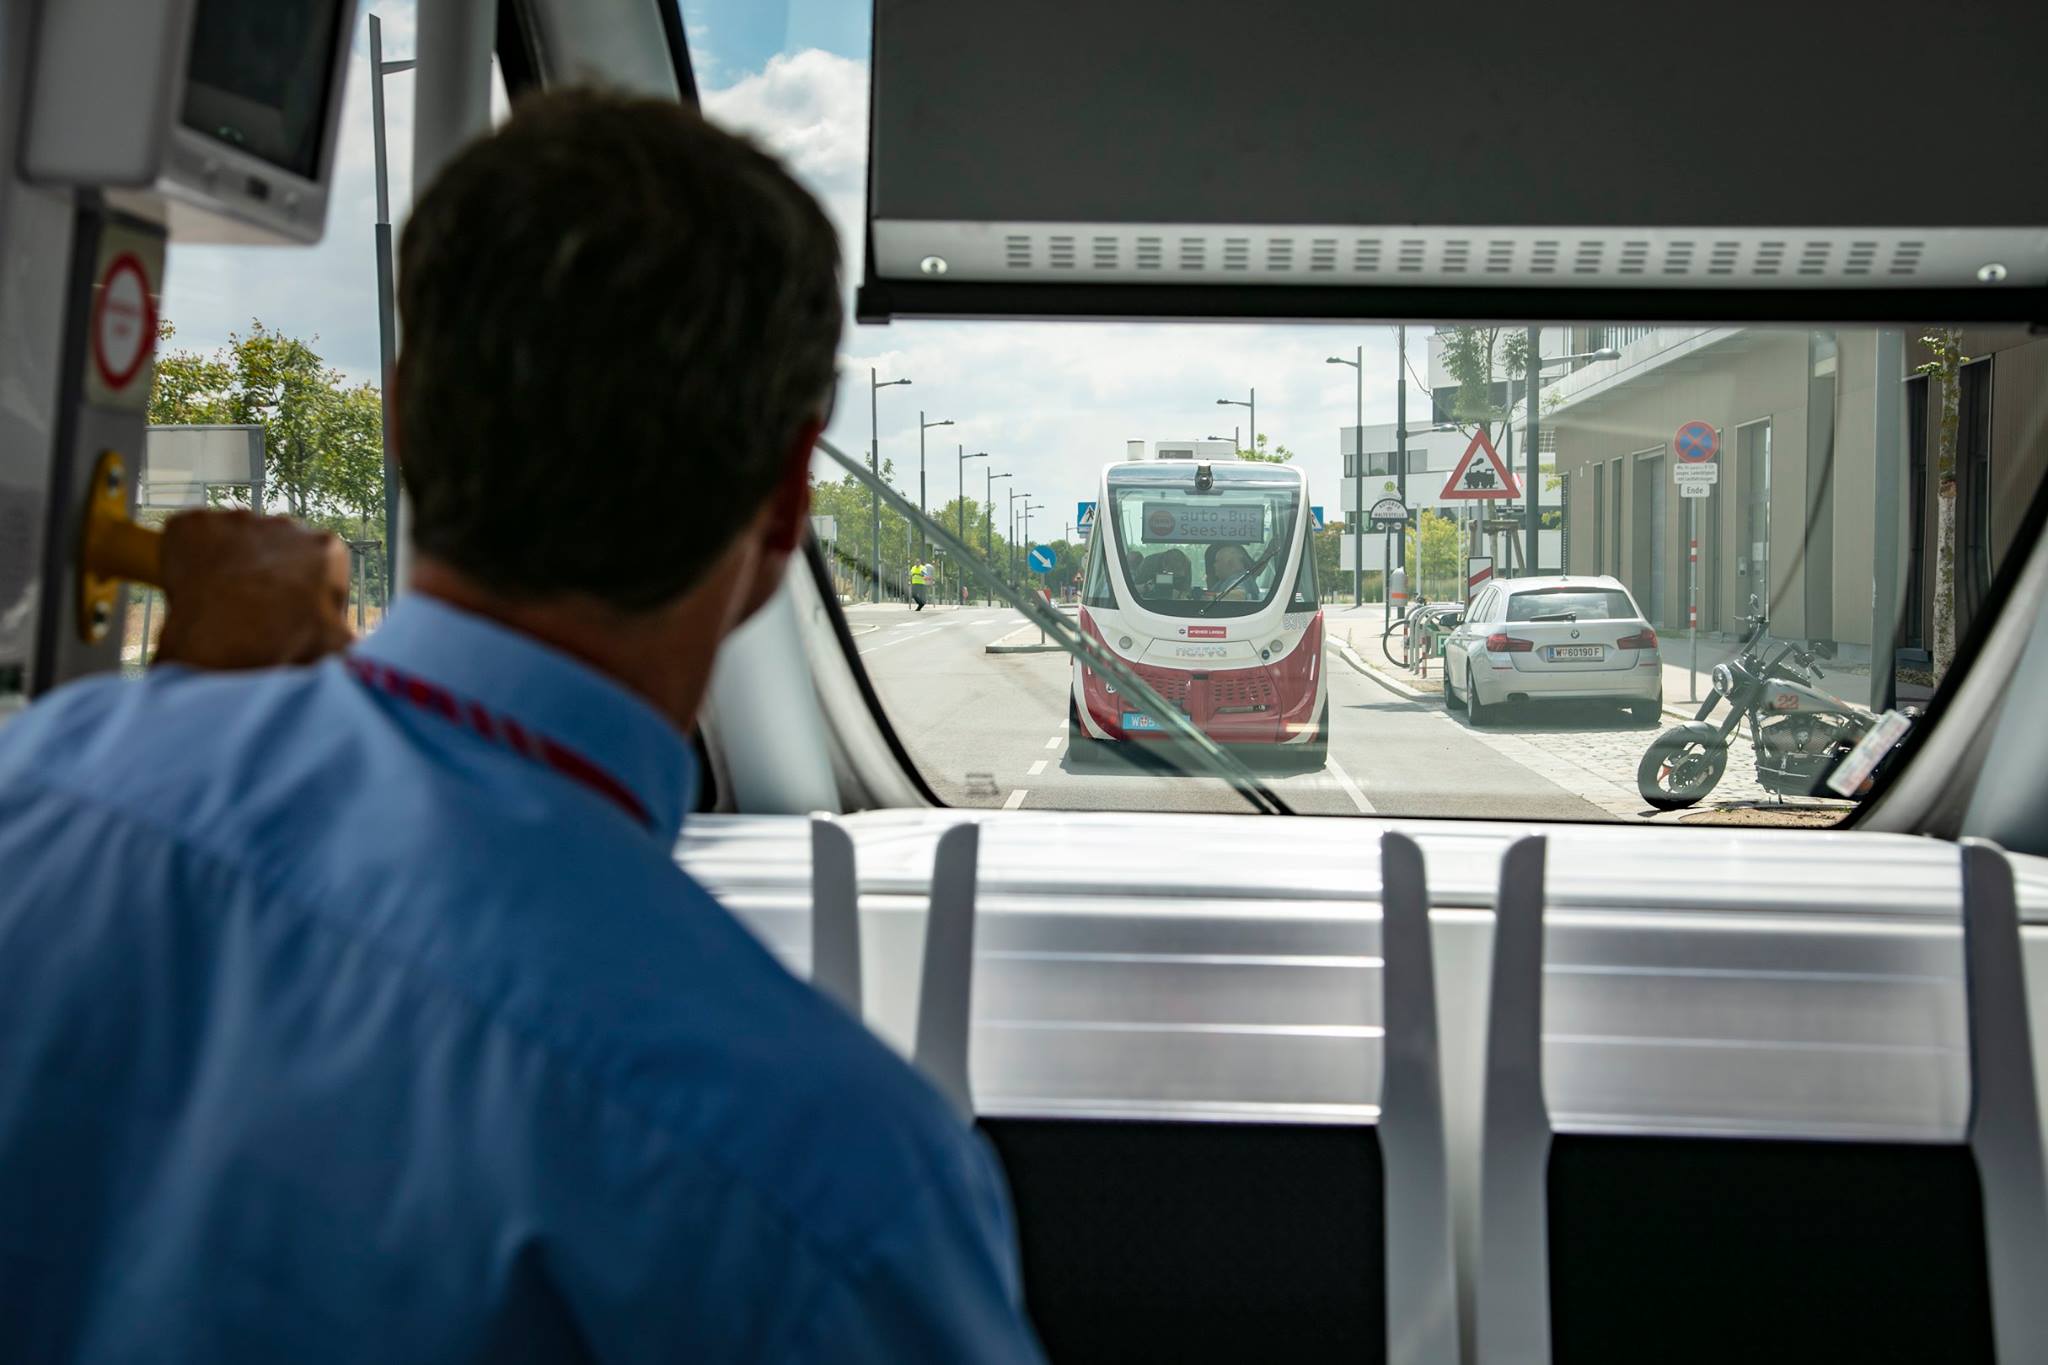 Wiener Linien prvi e-bus u testnoj vožnji